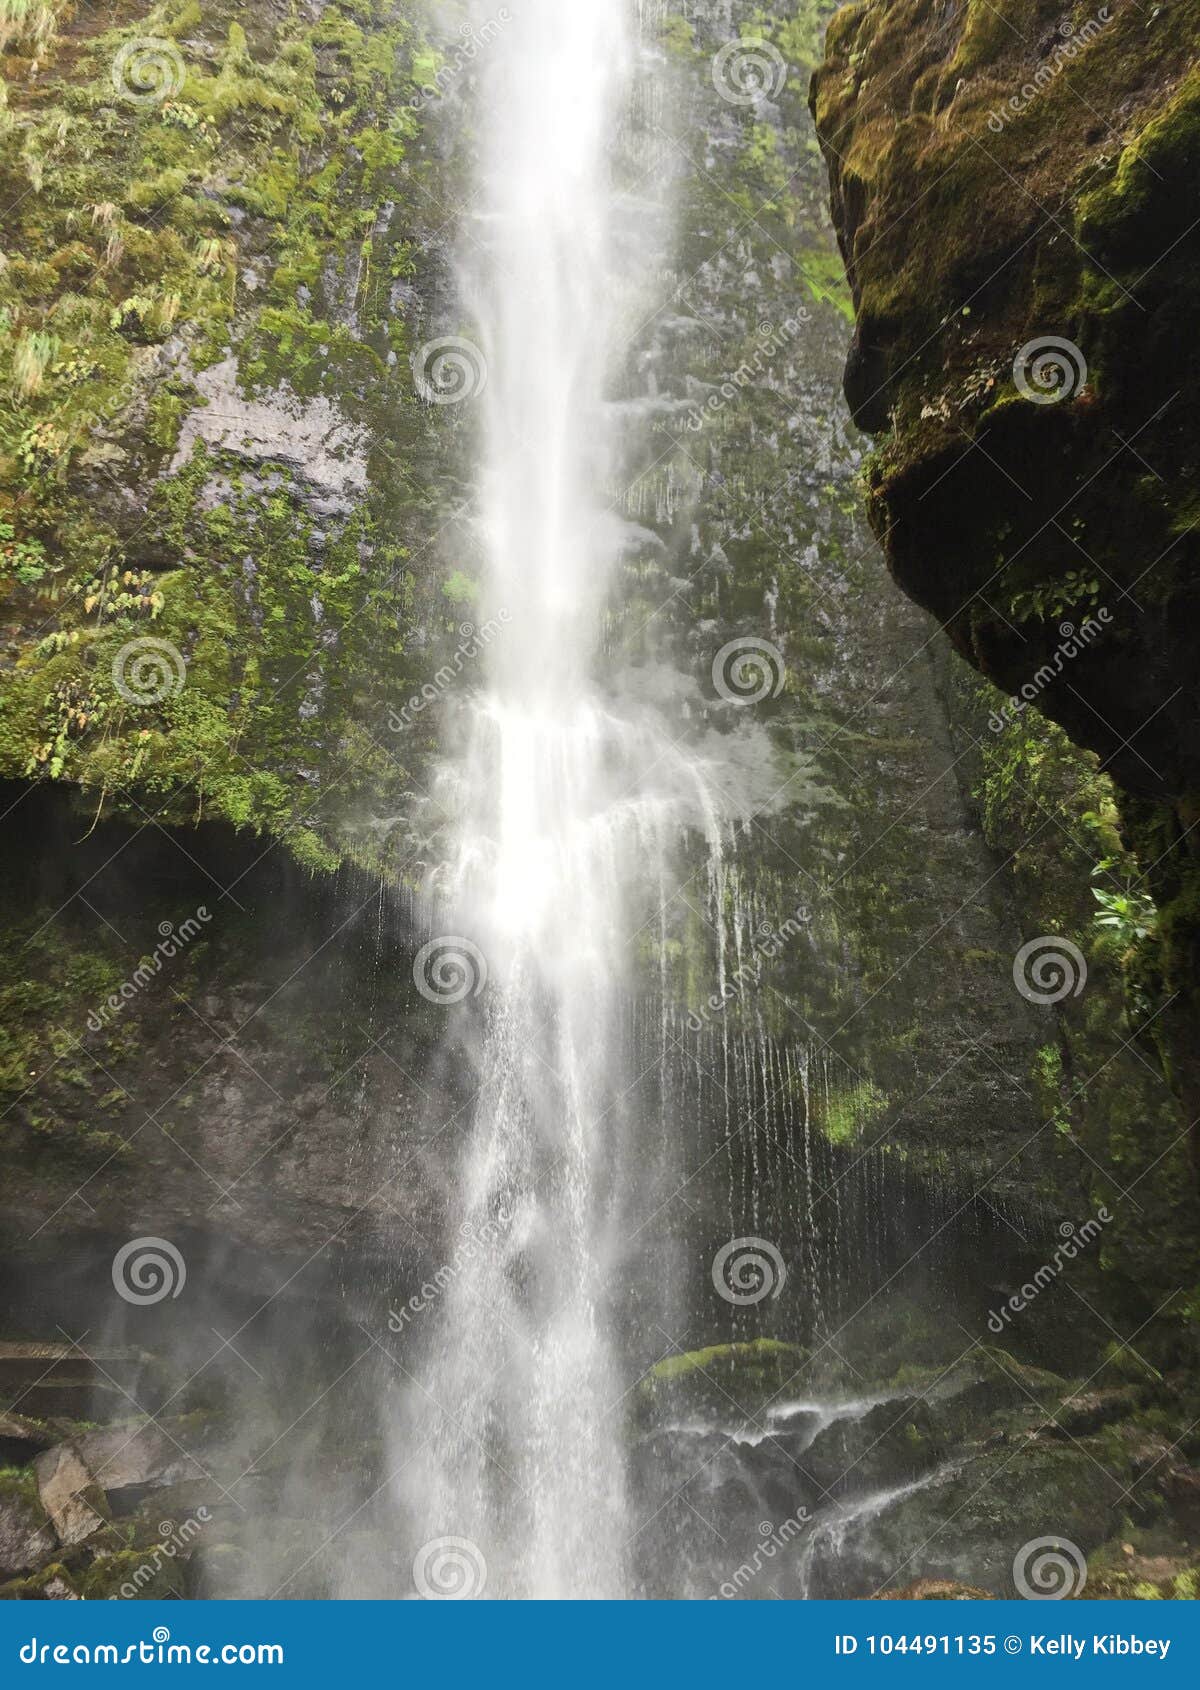 El Chorro Waterfall Up Close Ecuador Stock Image Image Of